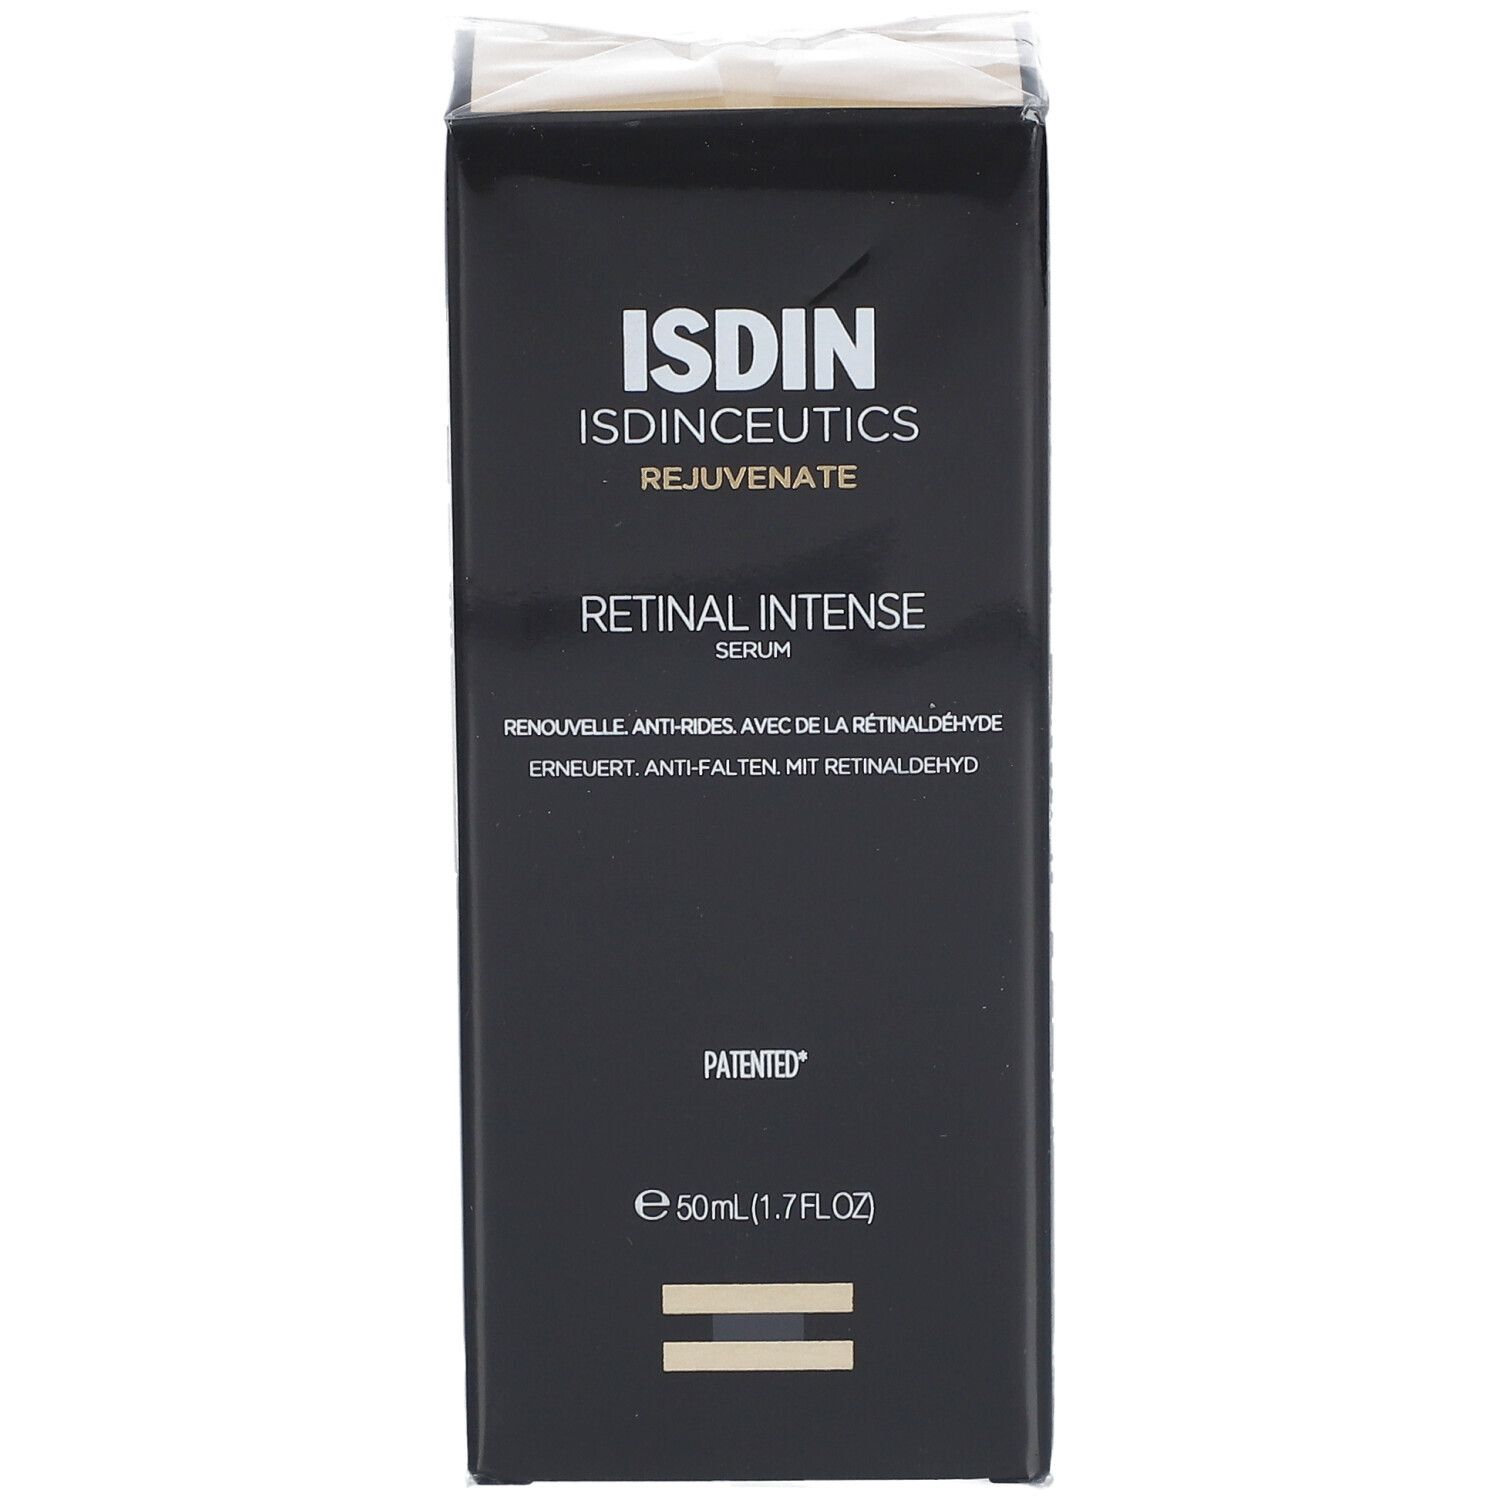 ISDIN Isdinceutics Retinal Intense